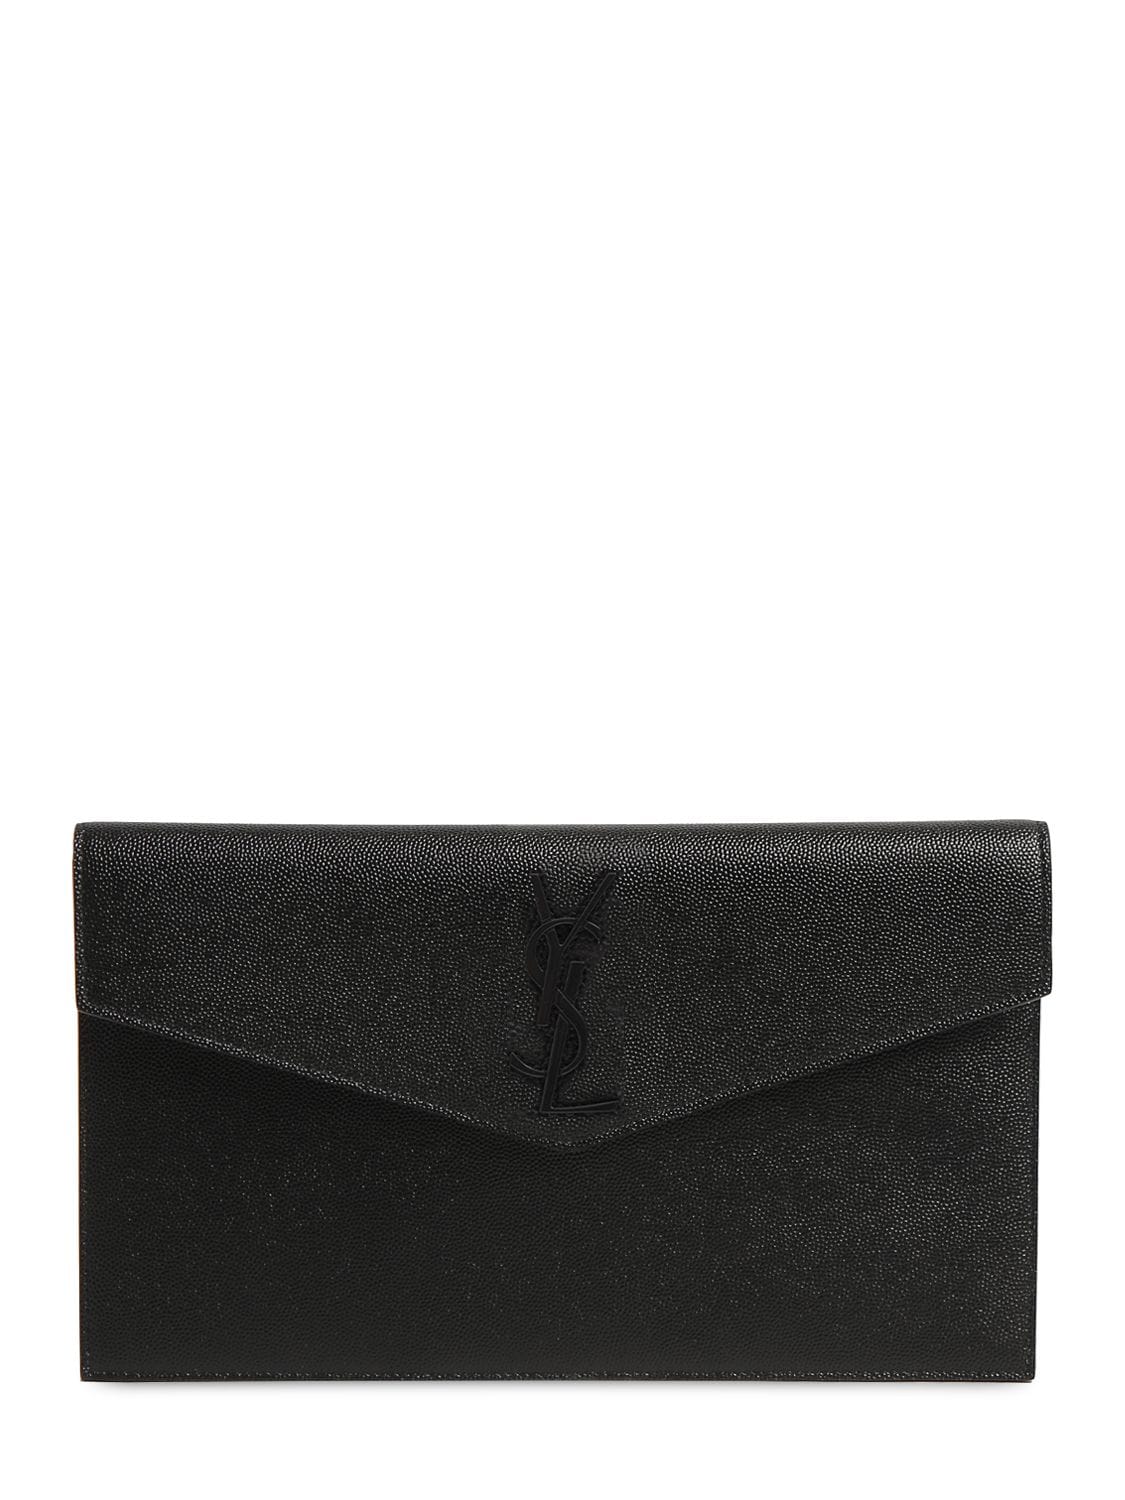 Saint Laurent Medium Uptown Pebbled Leather Pouch In Black | ModeSens